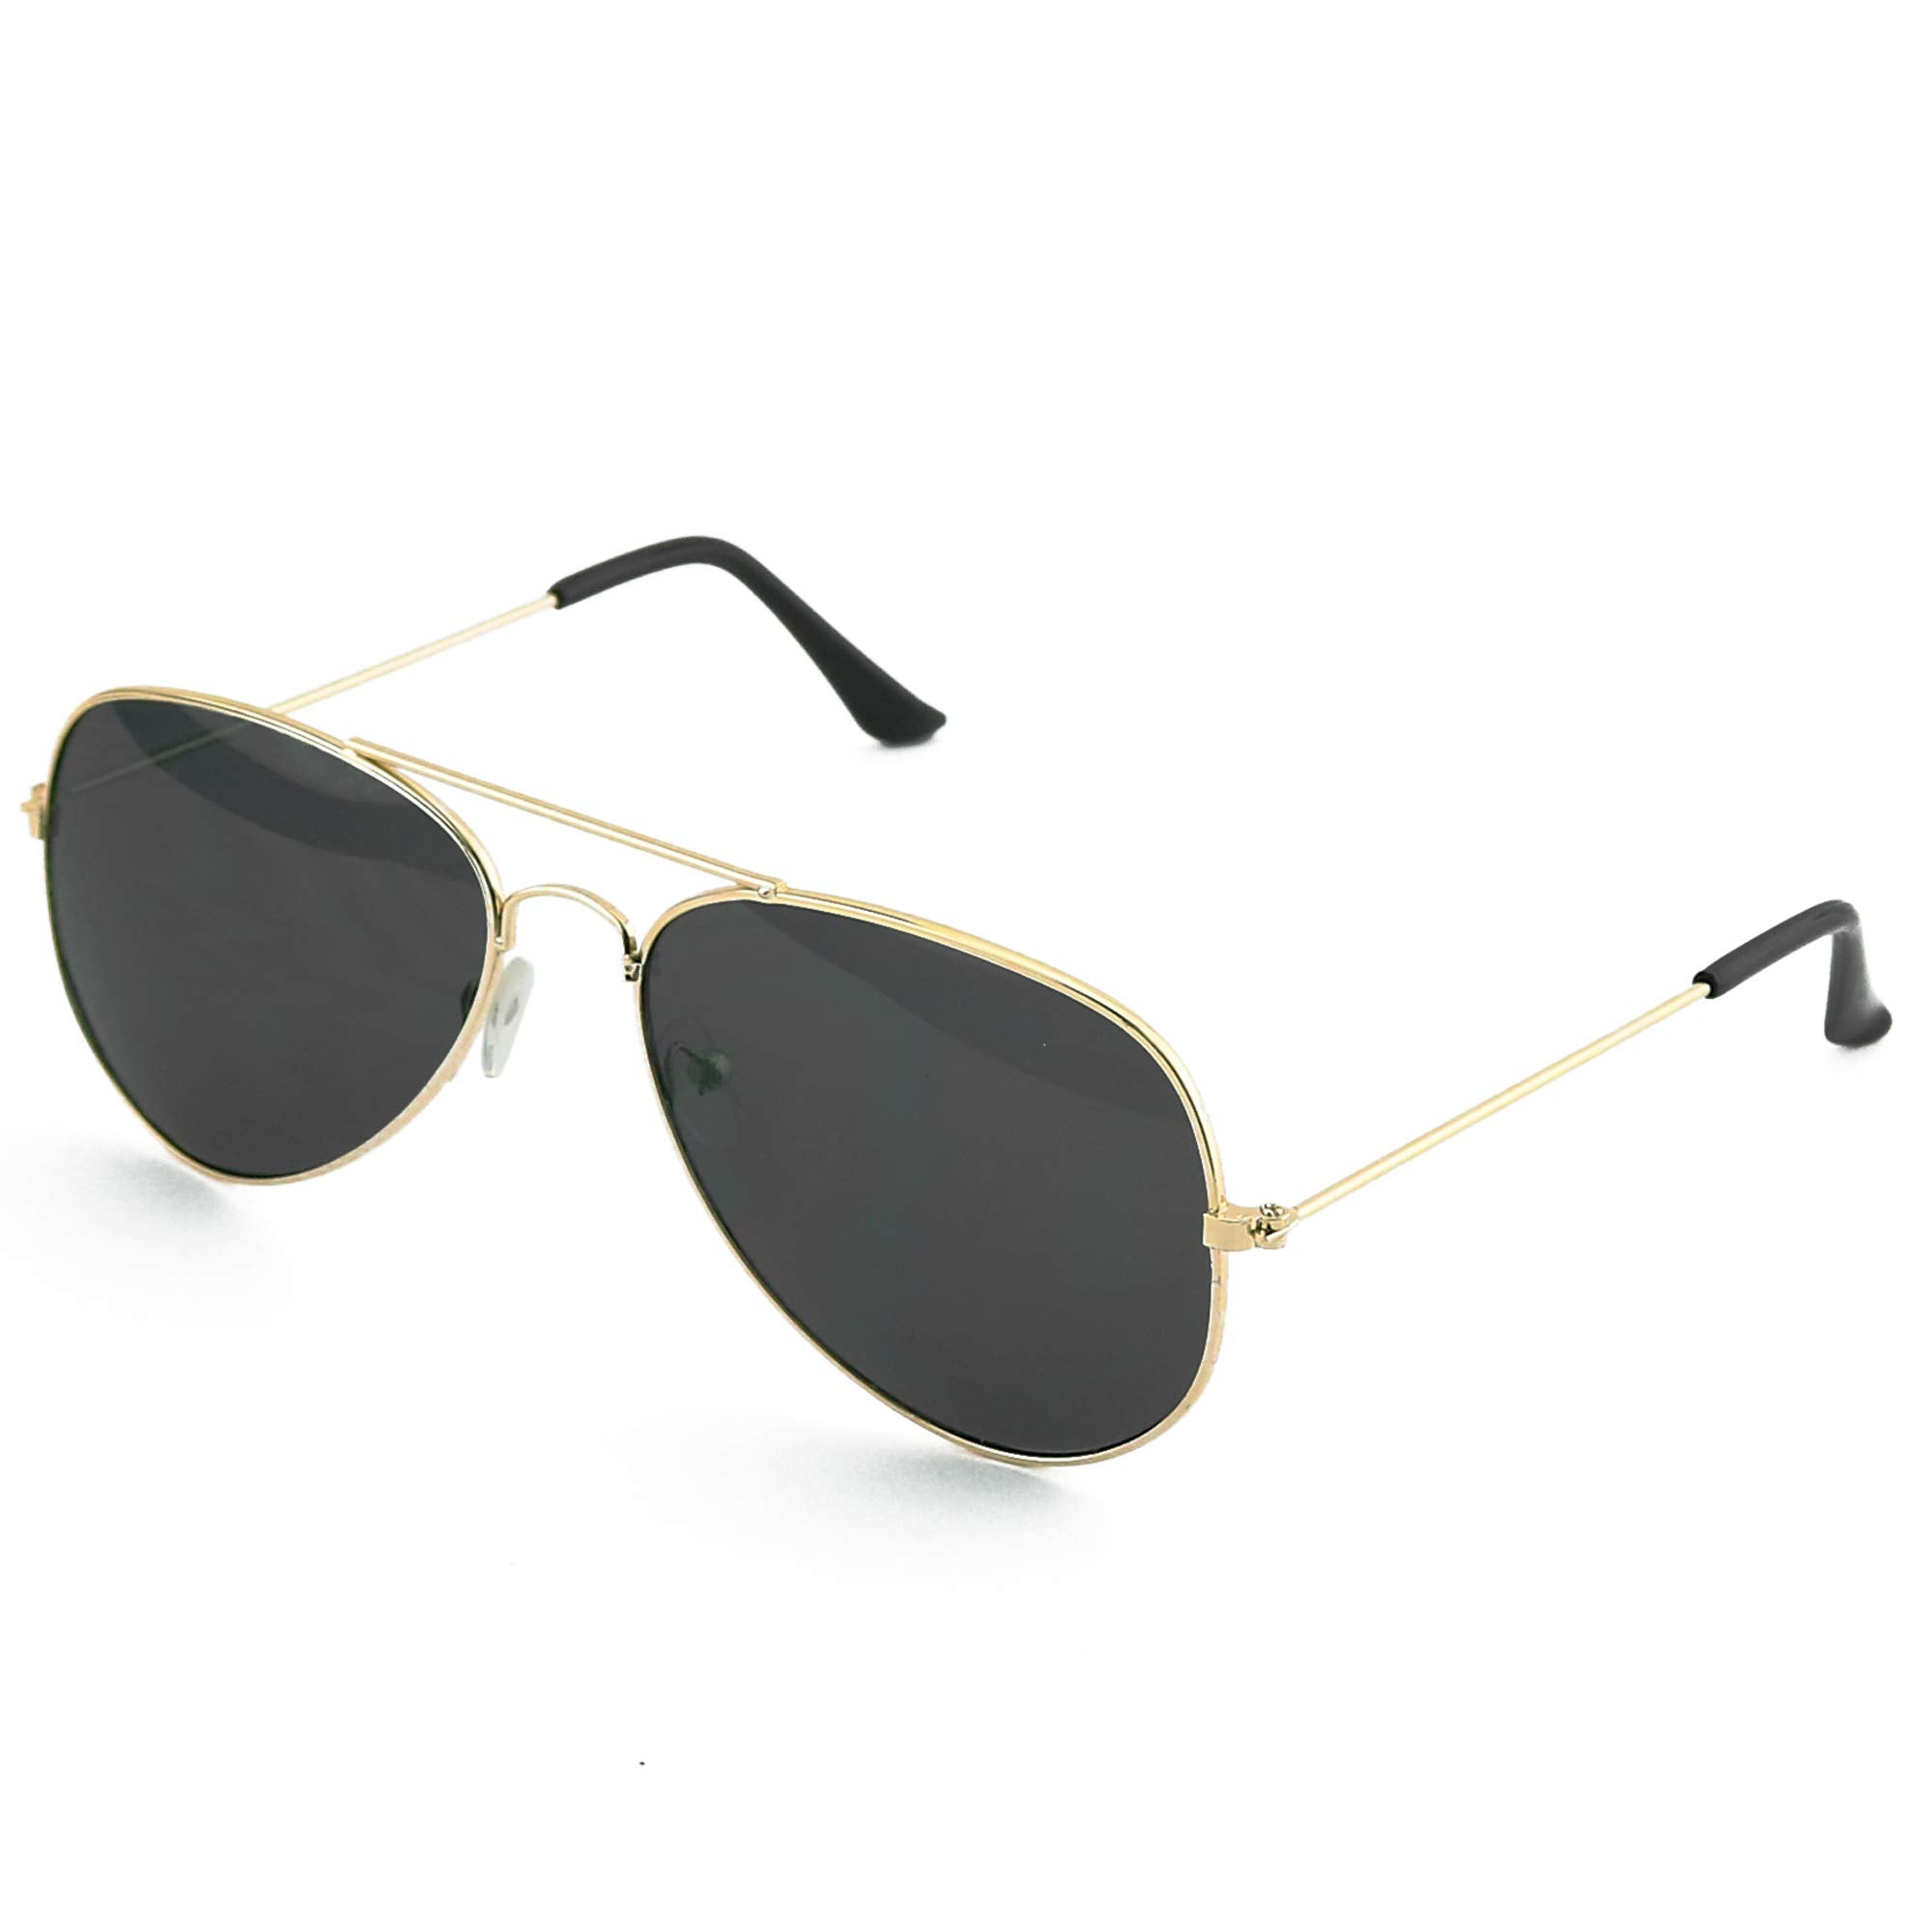 Black Gold Aviator Sunglasses - Dark with G Style Glasses Military Sun